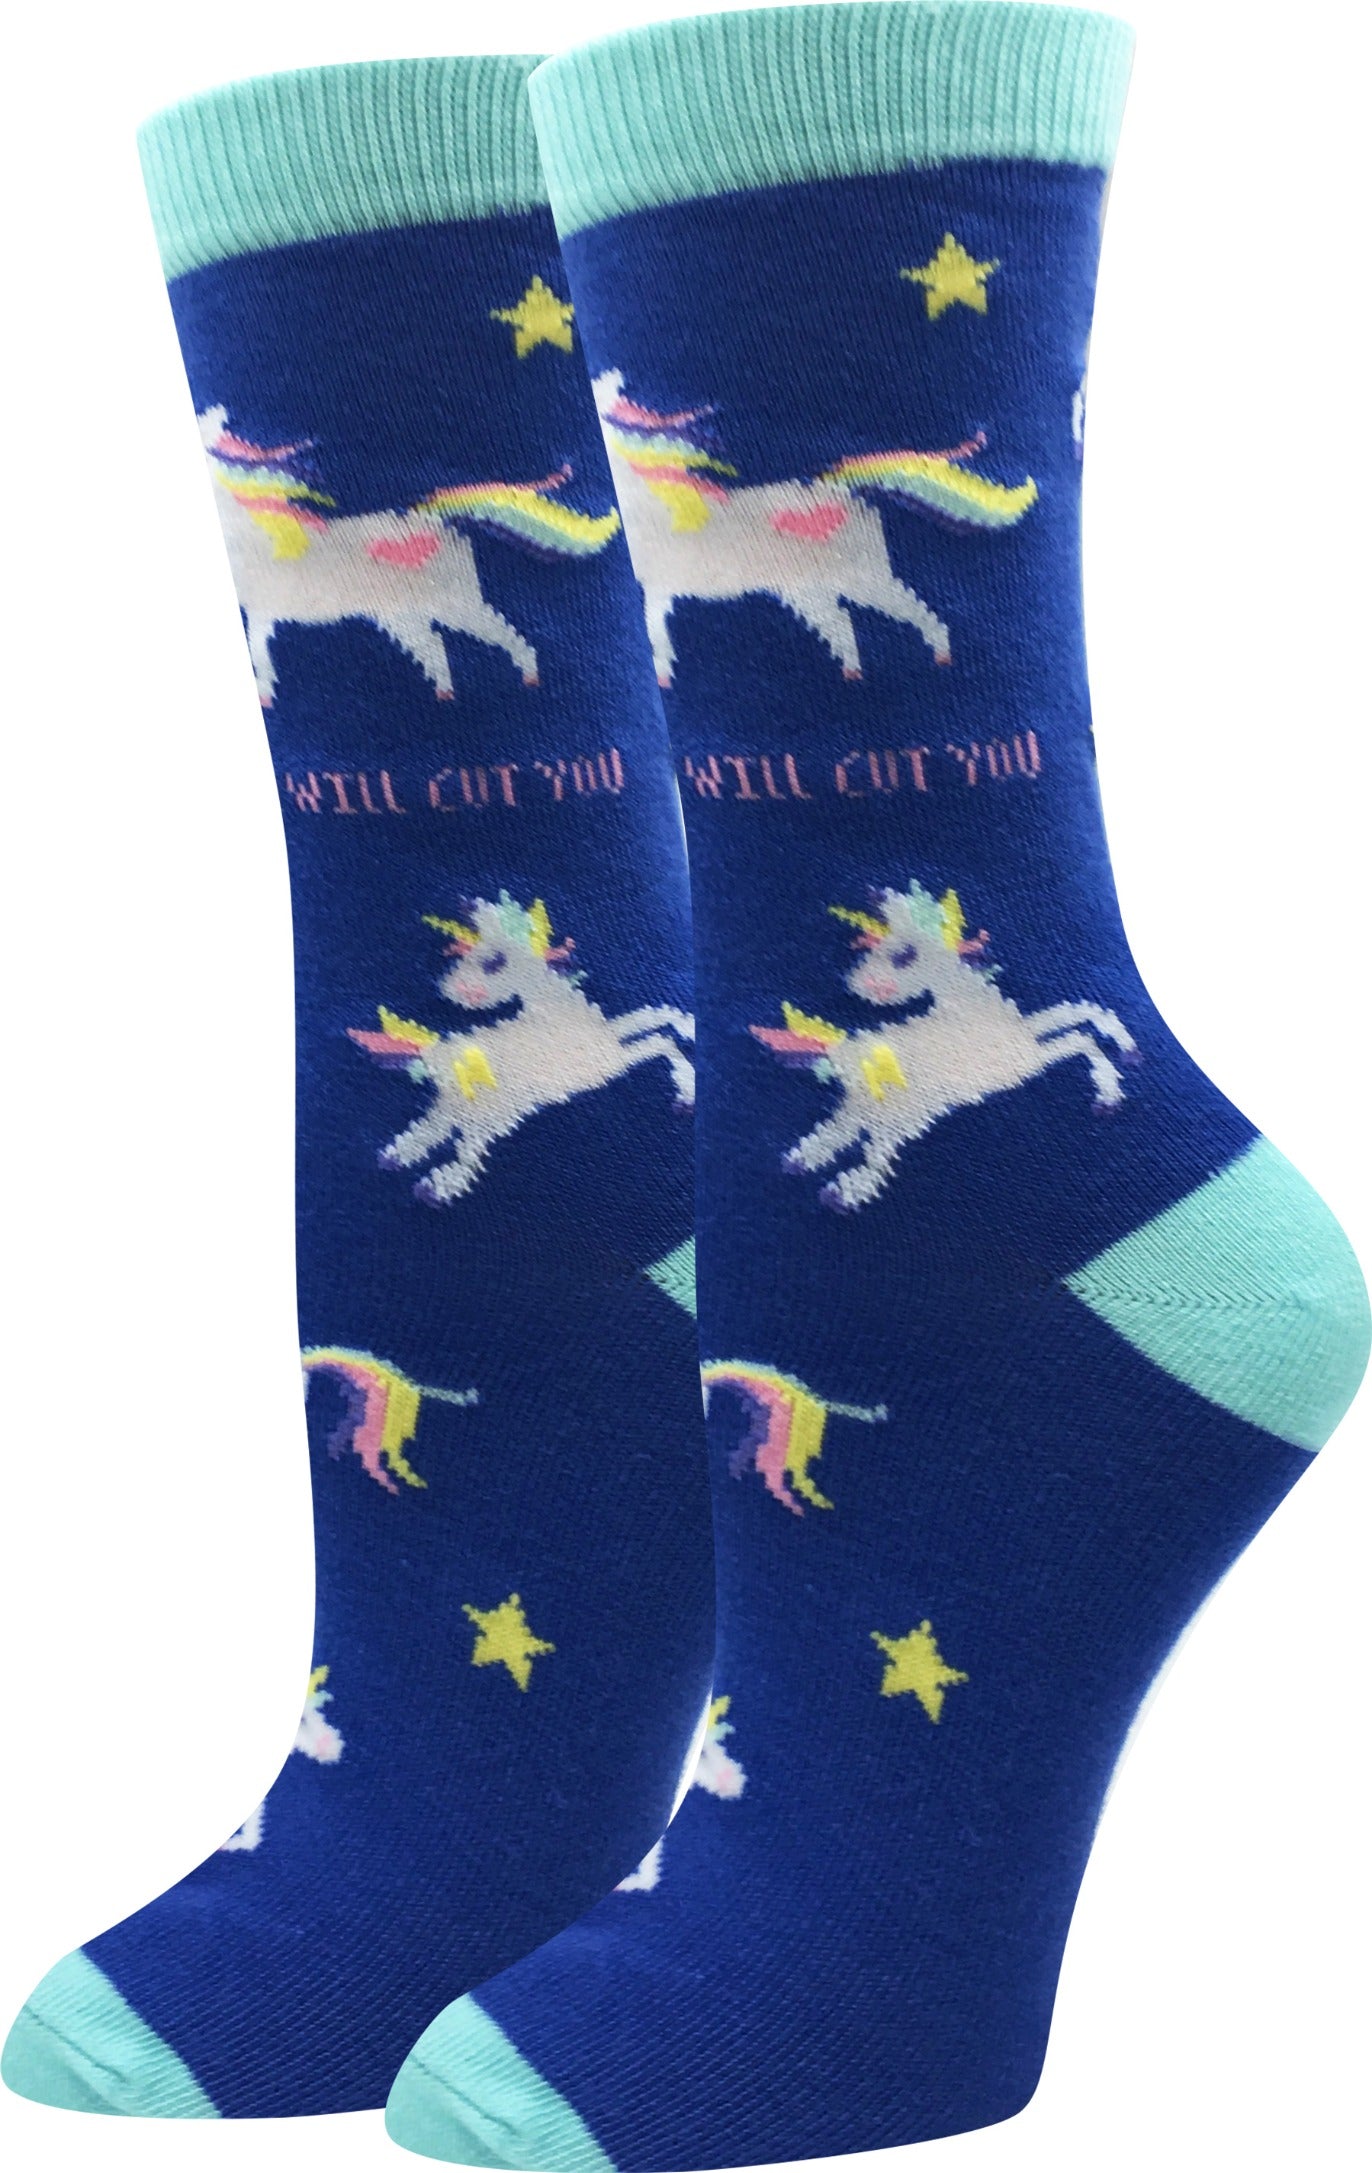 Stabby Unicorn Socks